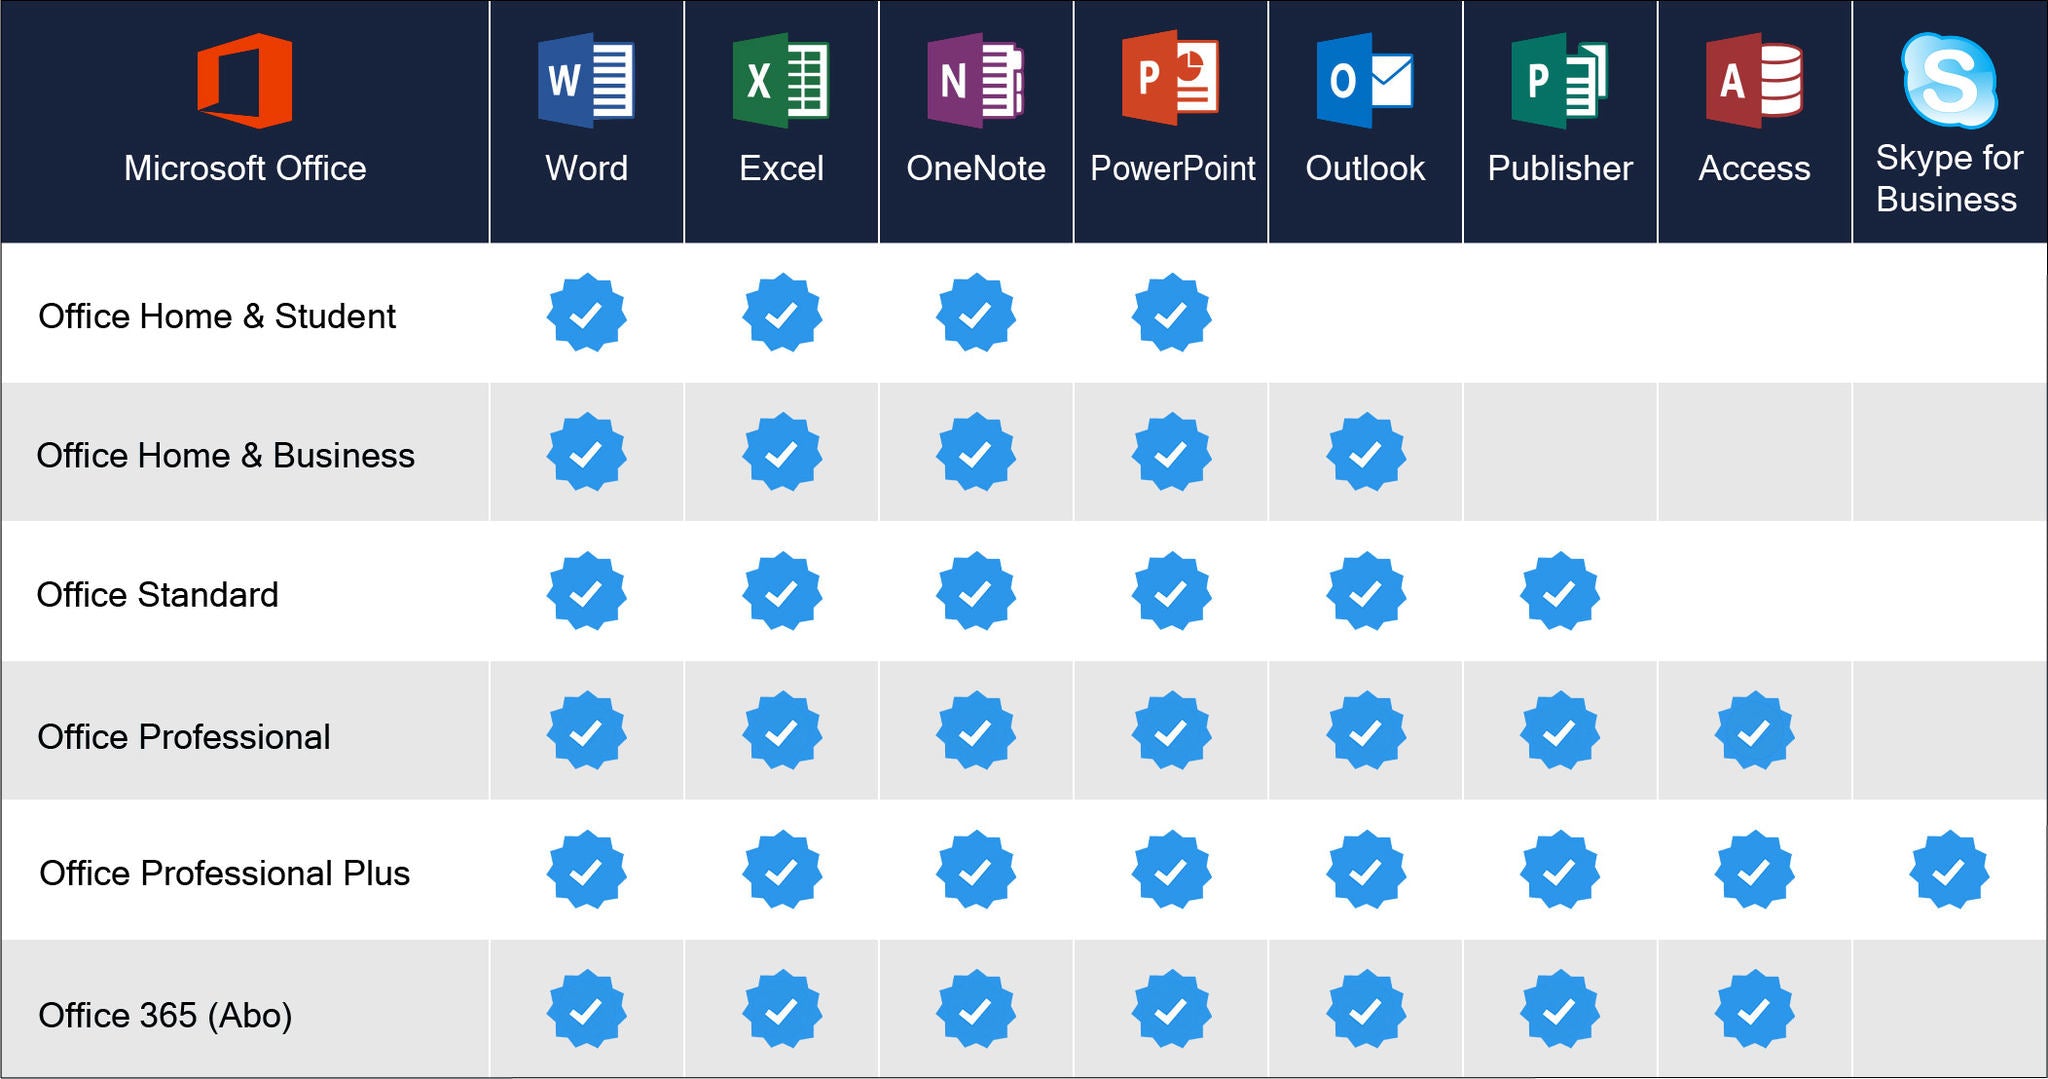 Microsoft Office 2013 Standard | Windows